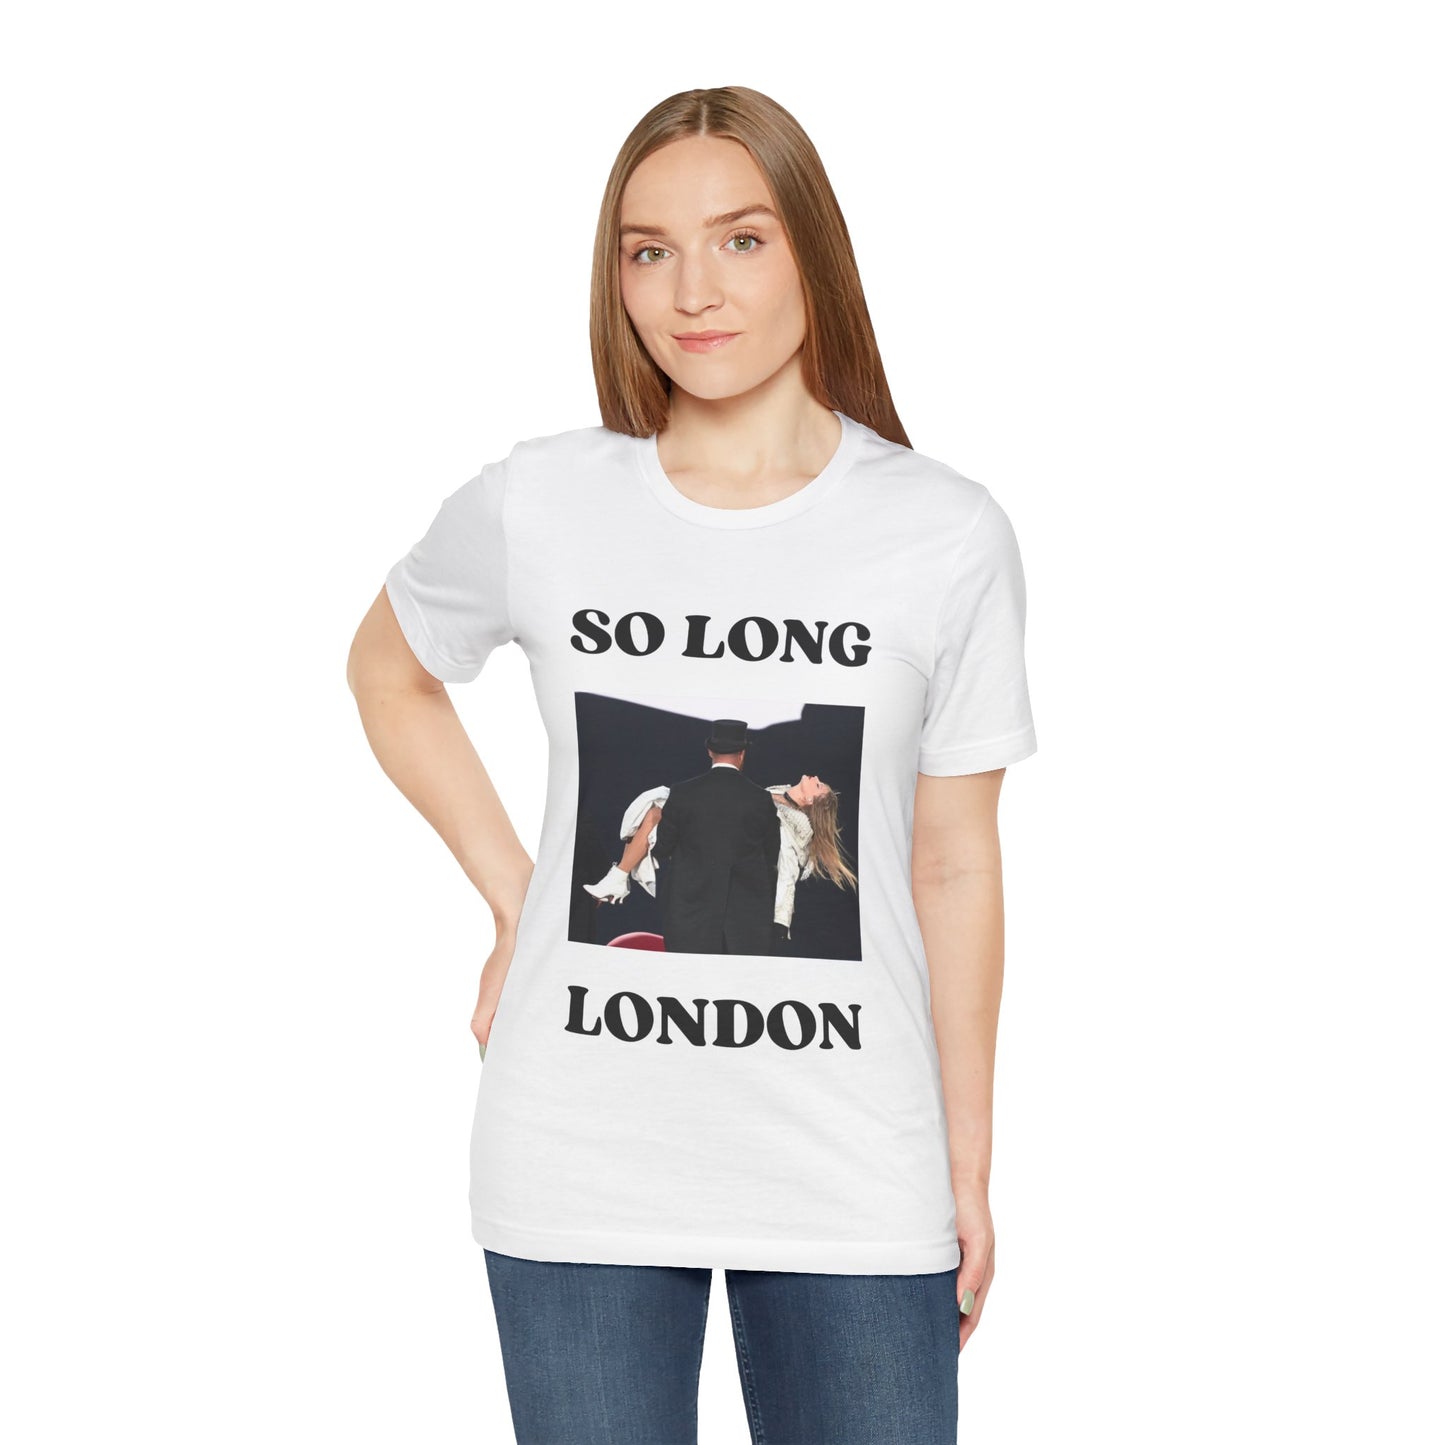 So Long London T-Shirt - "Two Graves, One Gun" - Trendy Caps